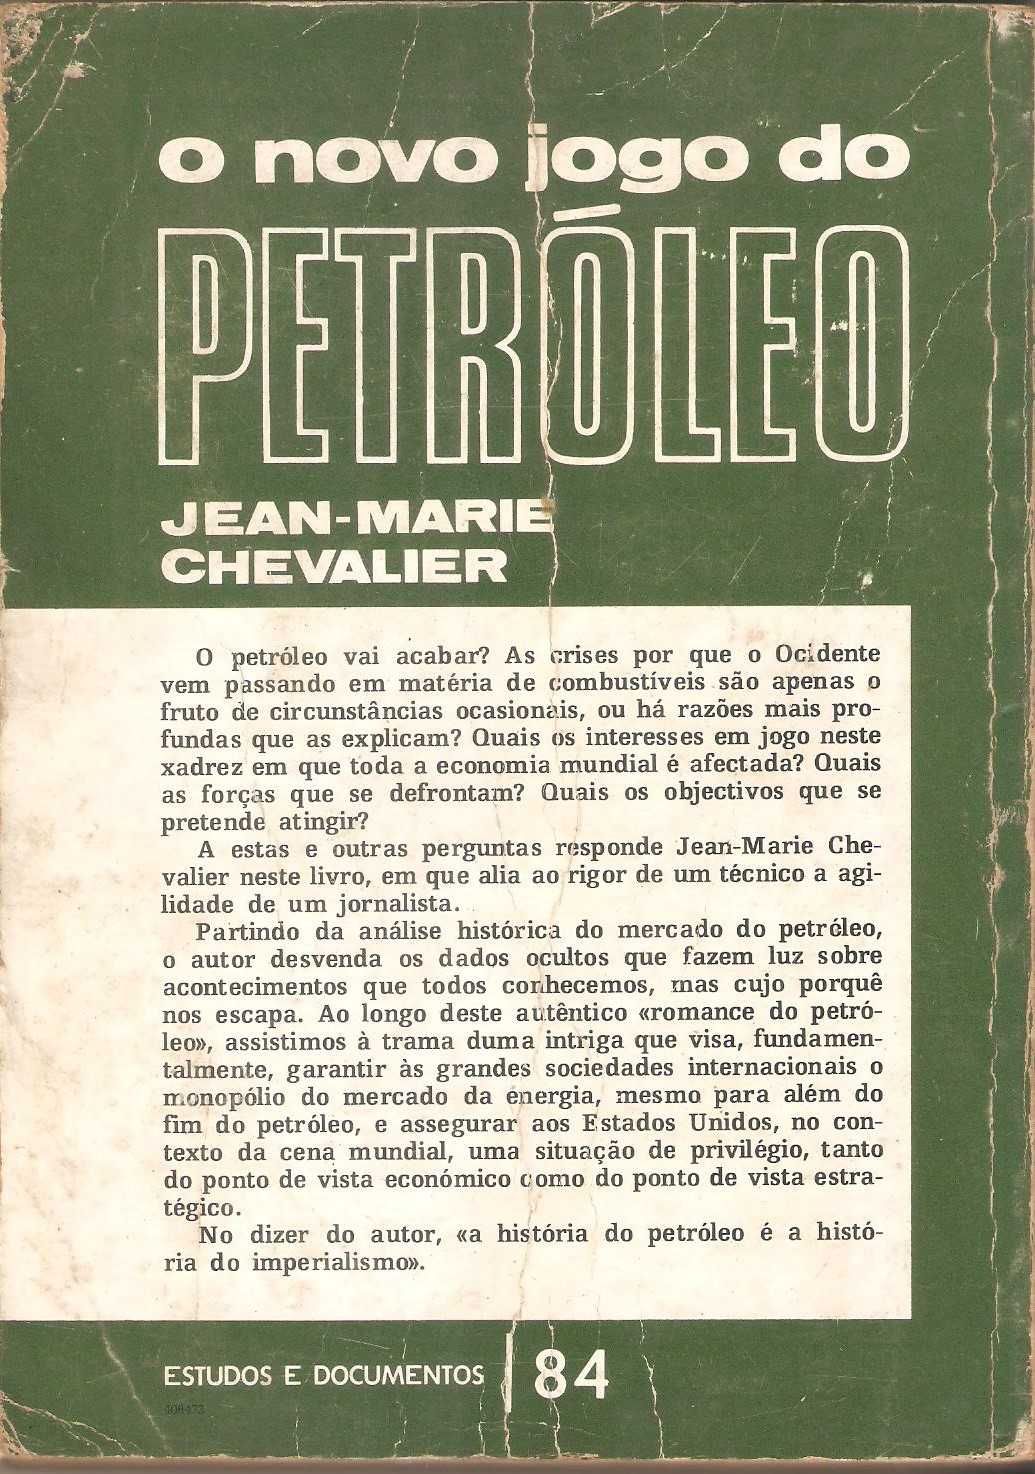 1973 o novo jogo do petróleo de Jean-Marie Chevalier